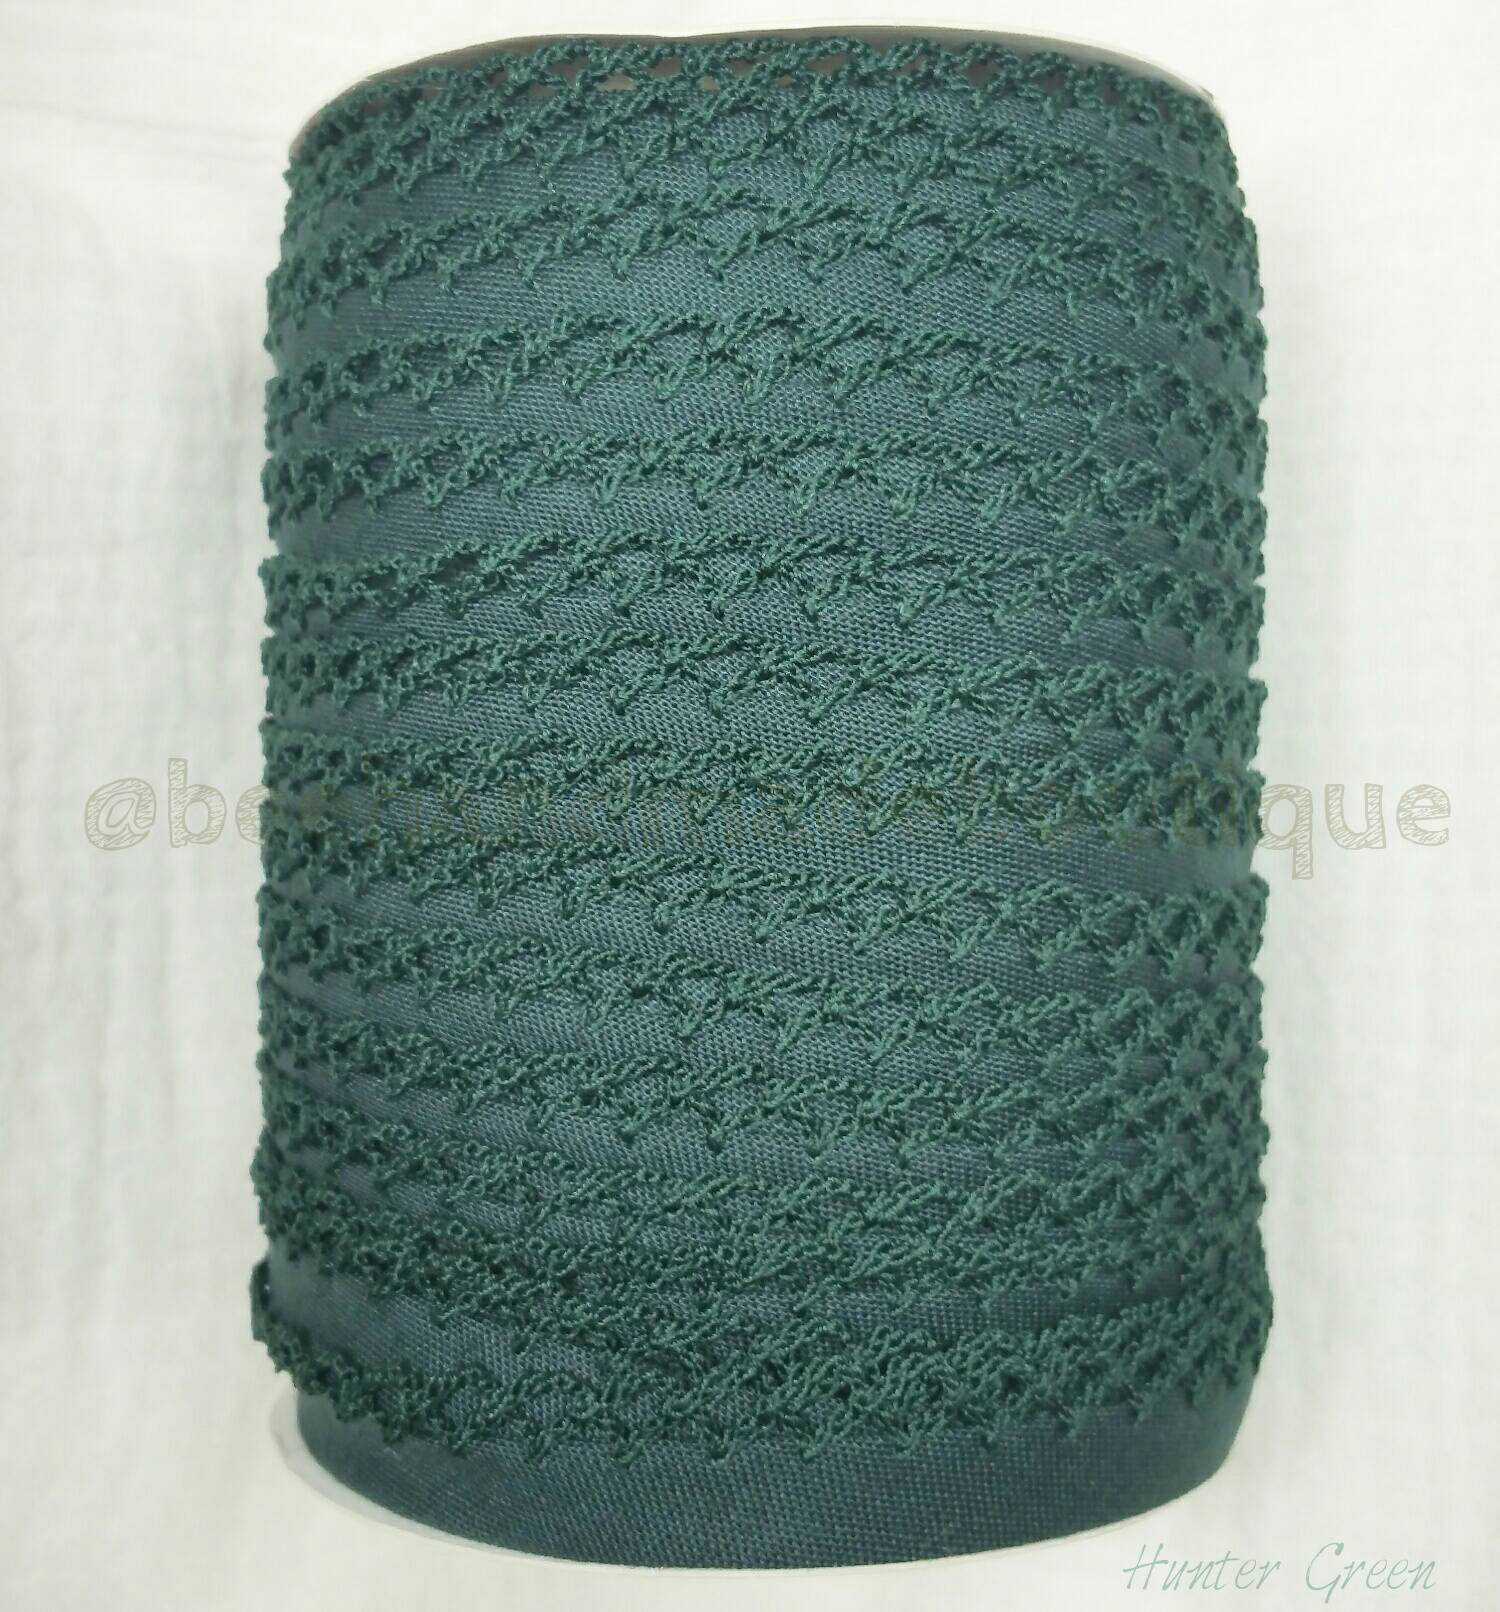 Green Crochet Bias Tape, Double Fold Bias Tape, Crochet Edge Bias Tape, Quilt Binding, HUNTER GREEN Bias Tape By the Yard, Green Lace Trim